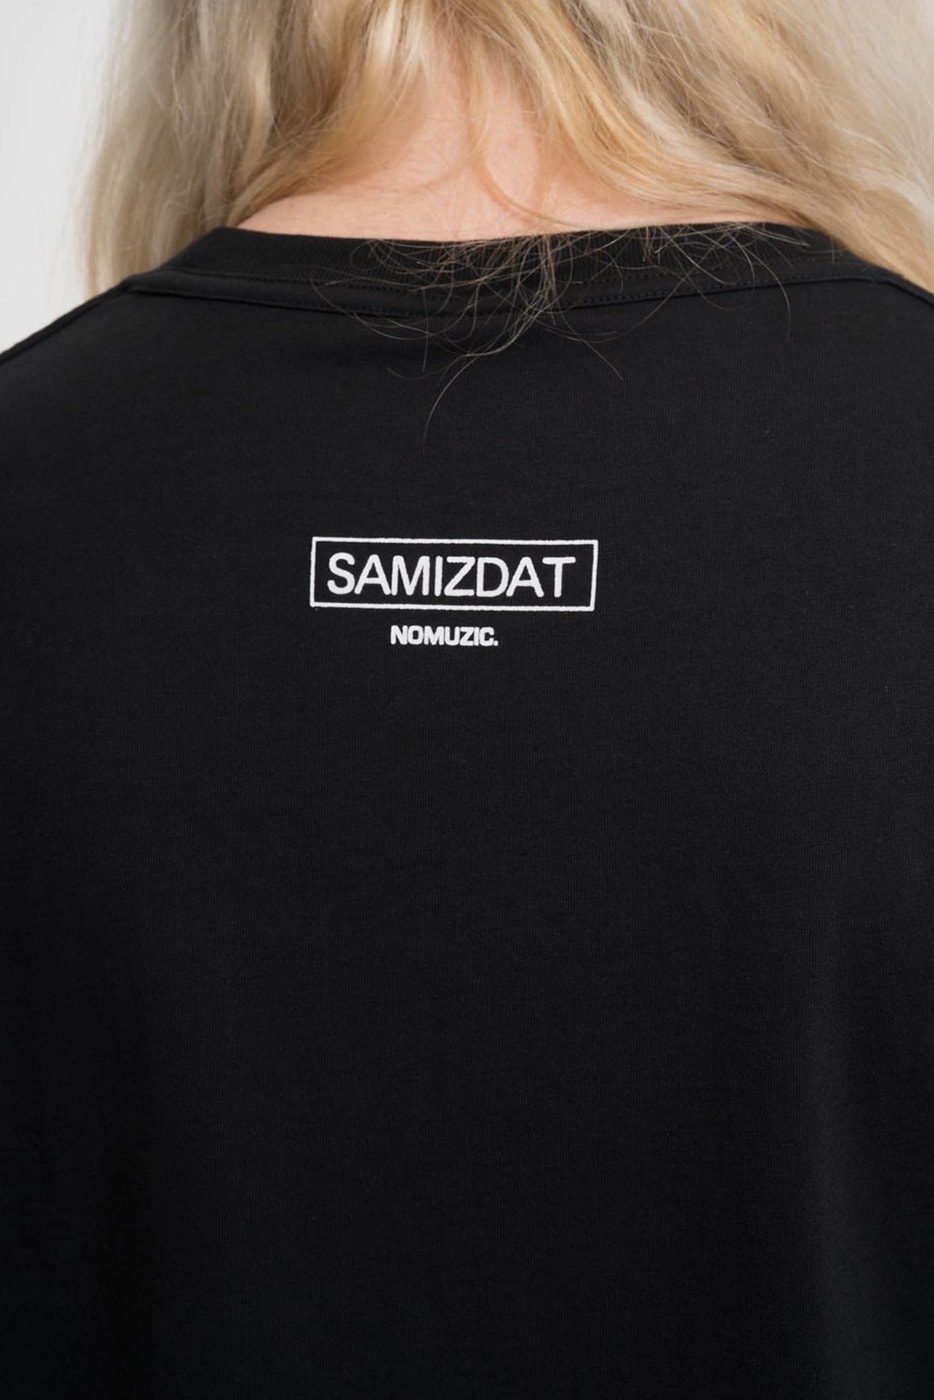 SAMIZDAT Yang Li Spring Summer 2018 Release T-Shirt Pins Patches Lighter Cap